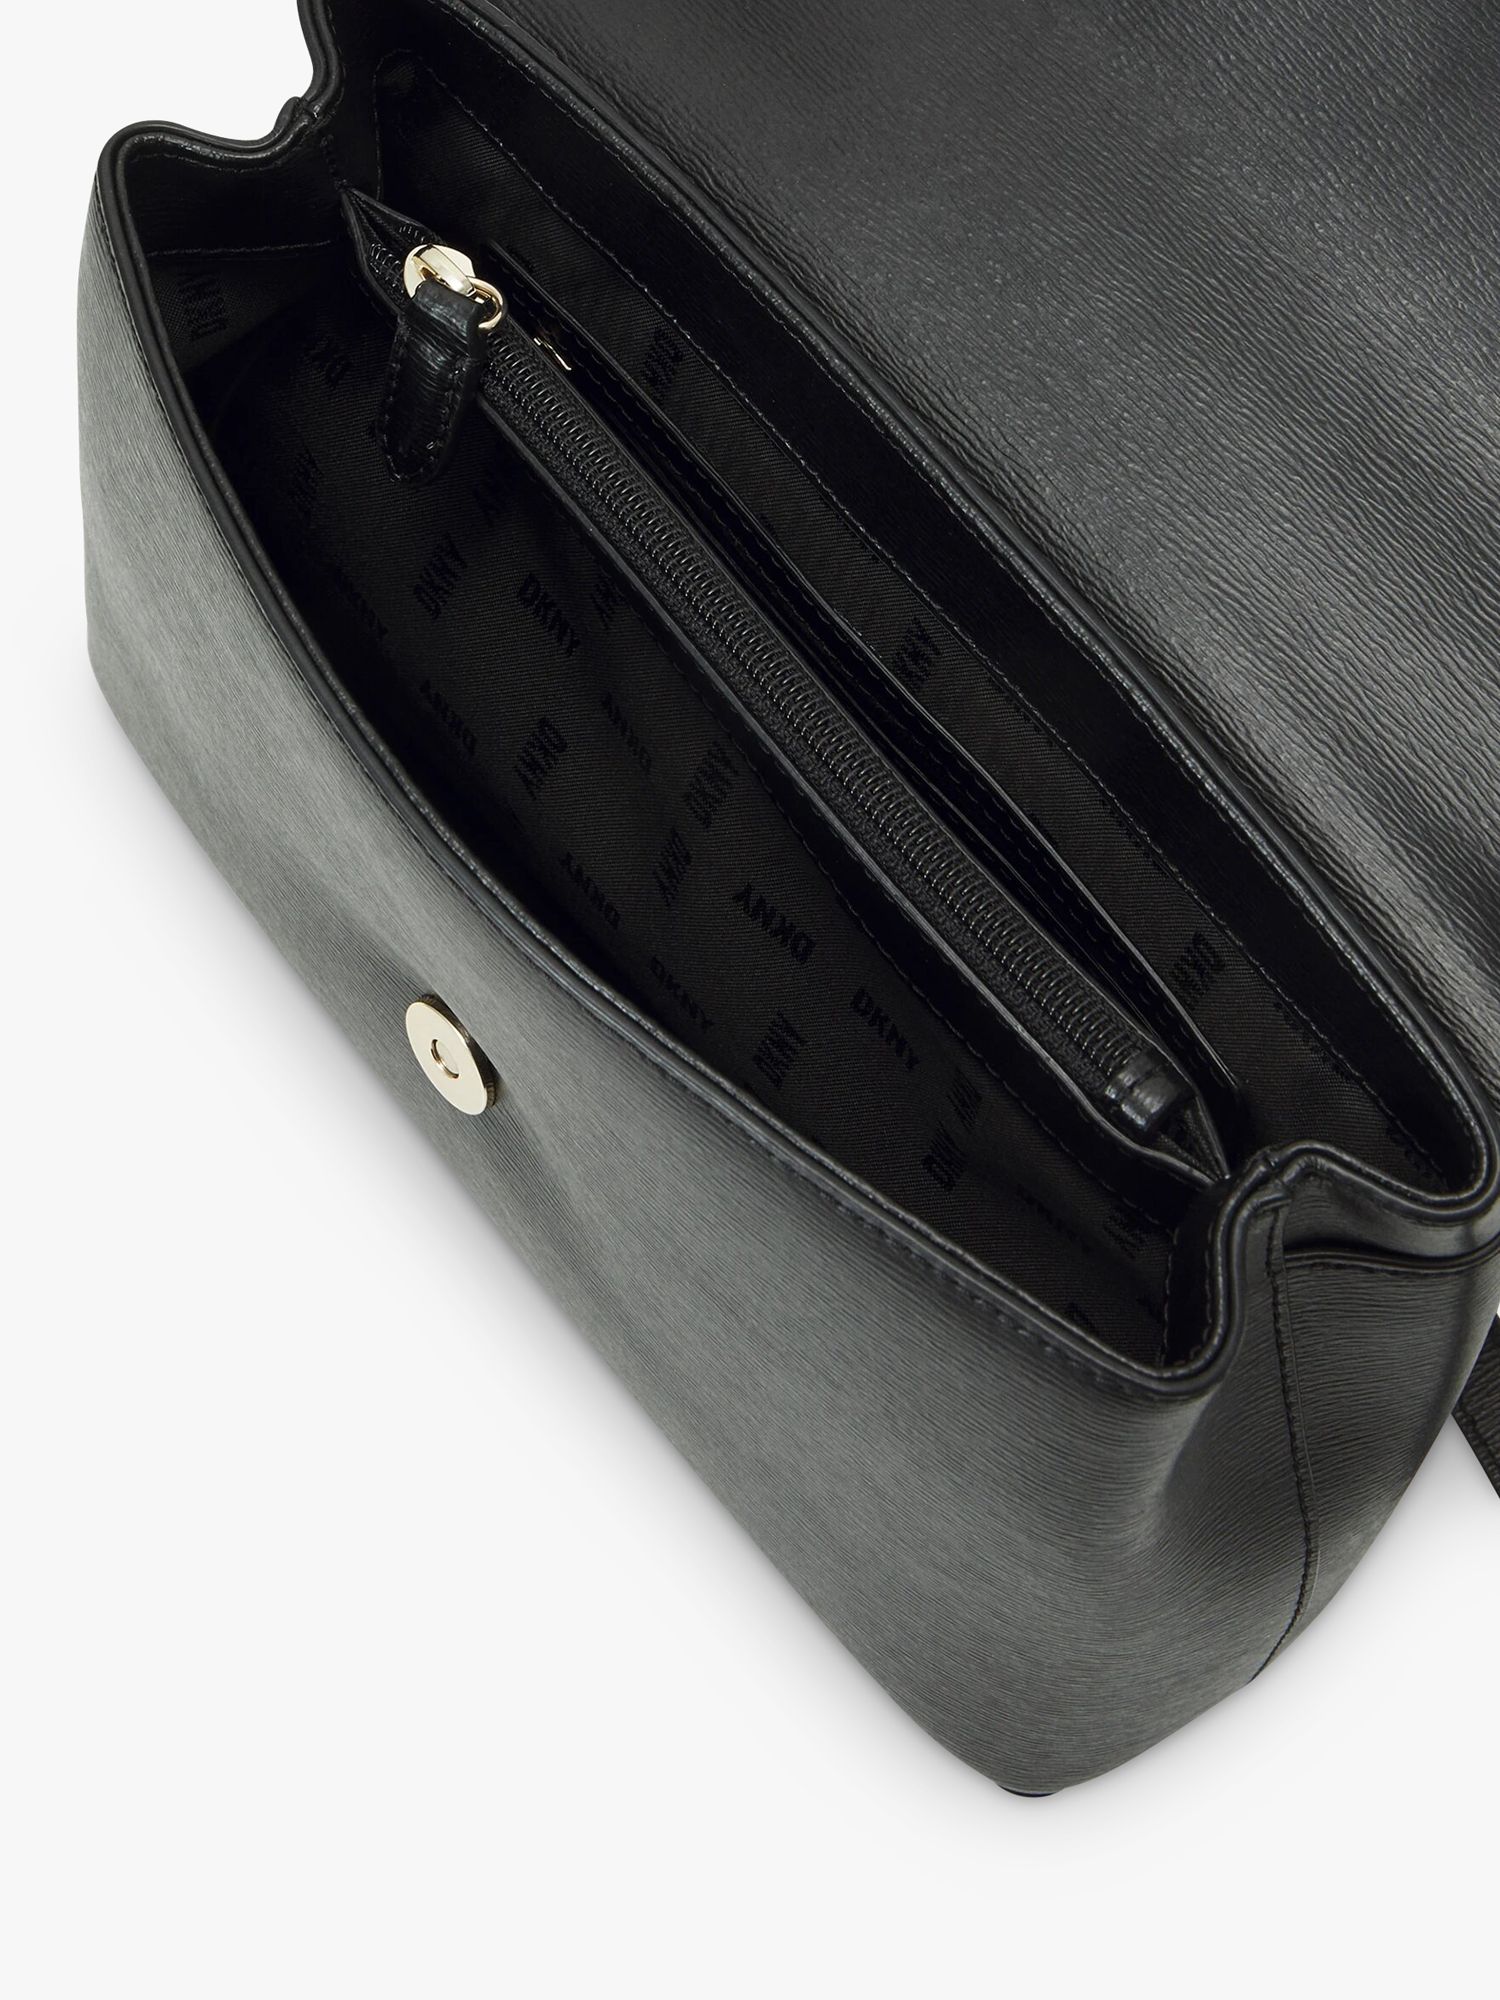 DKNY Bryant Leather Flap Cross Body Bag, Black/Gold